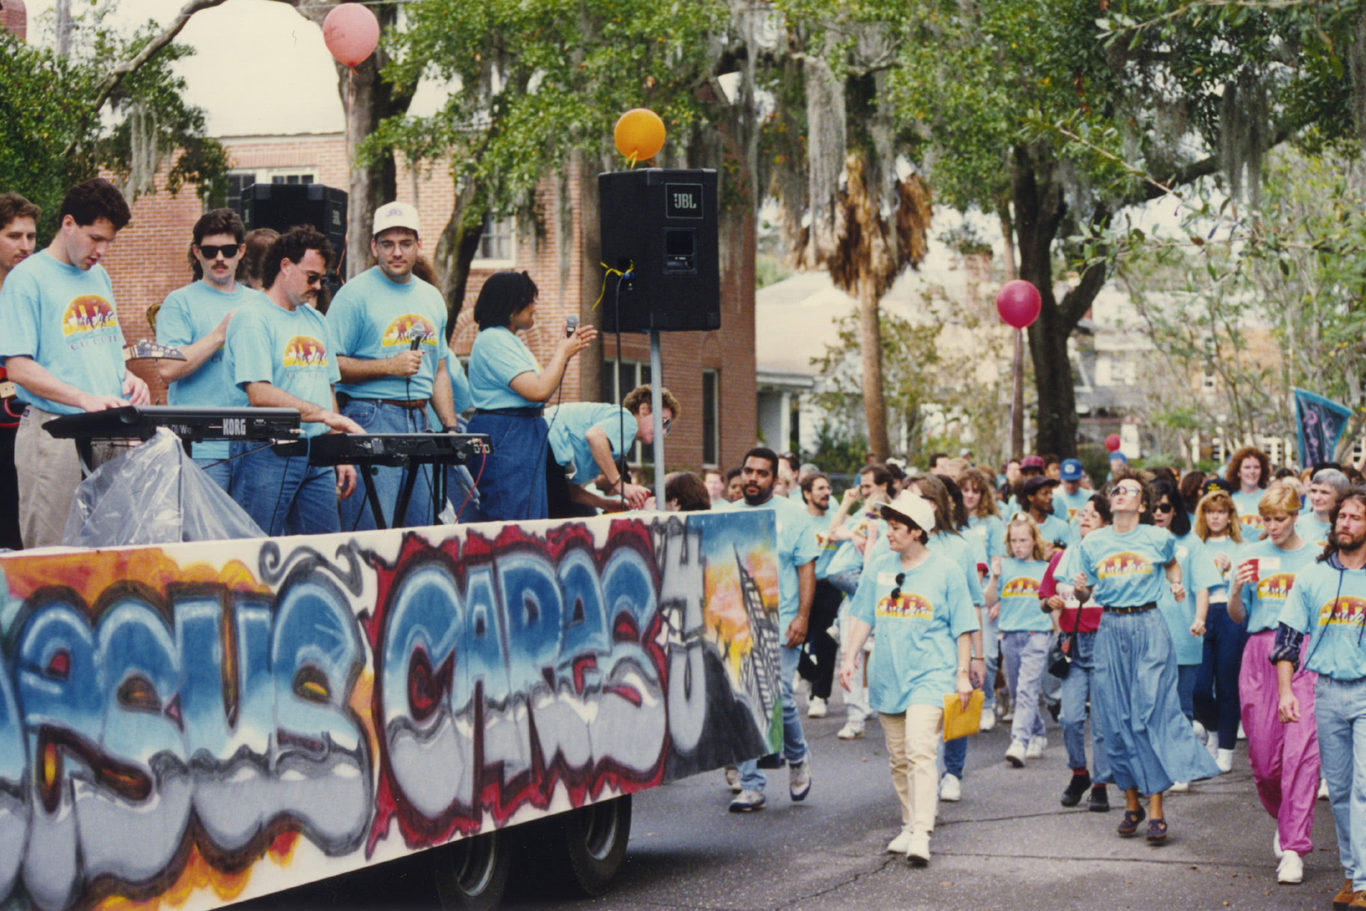 Church members walking behind a parade float